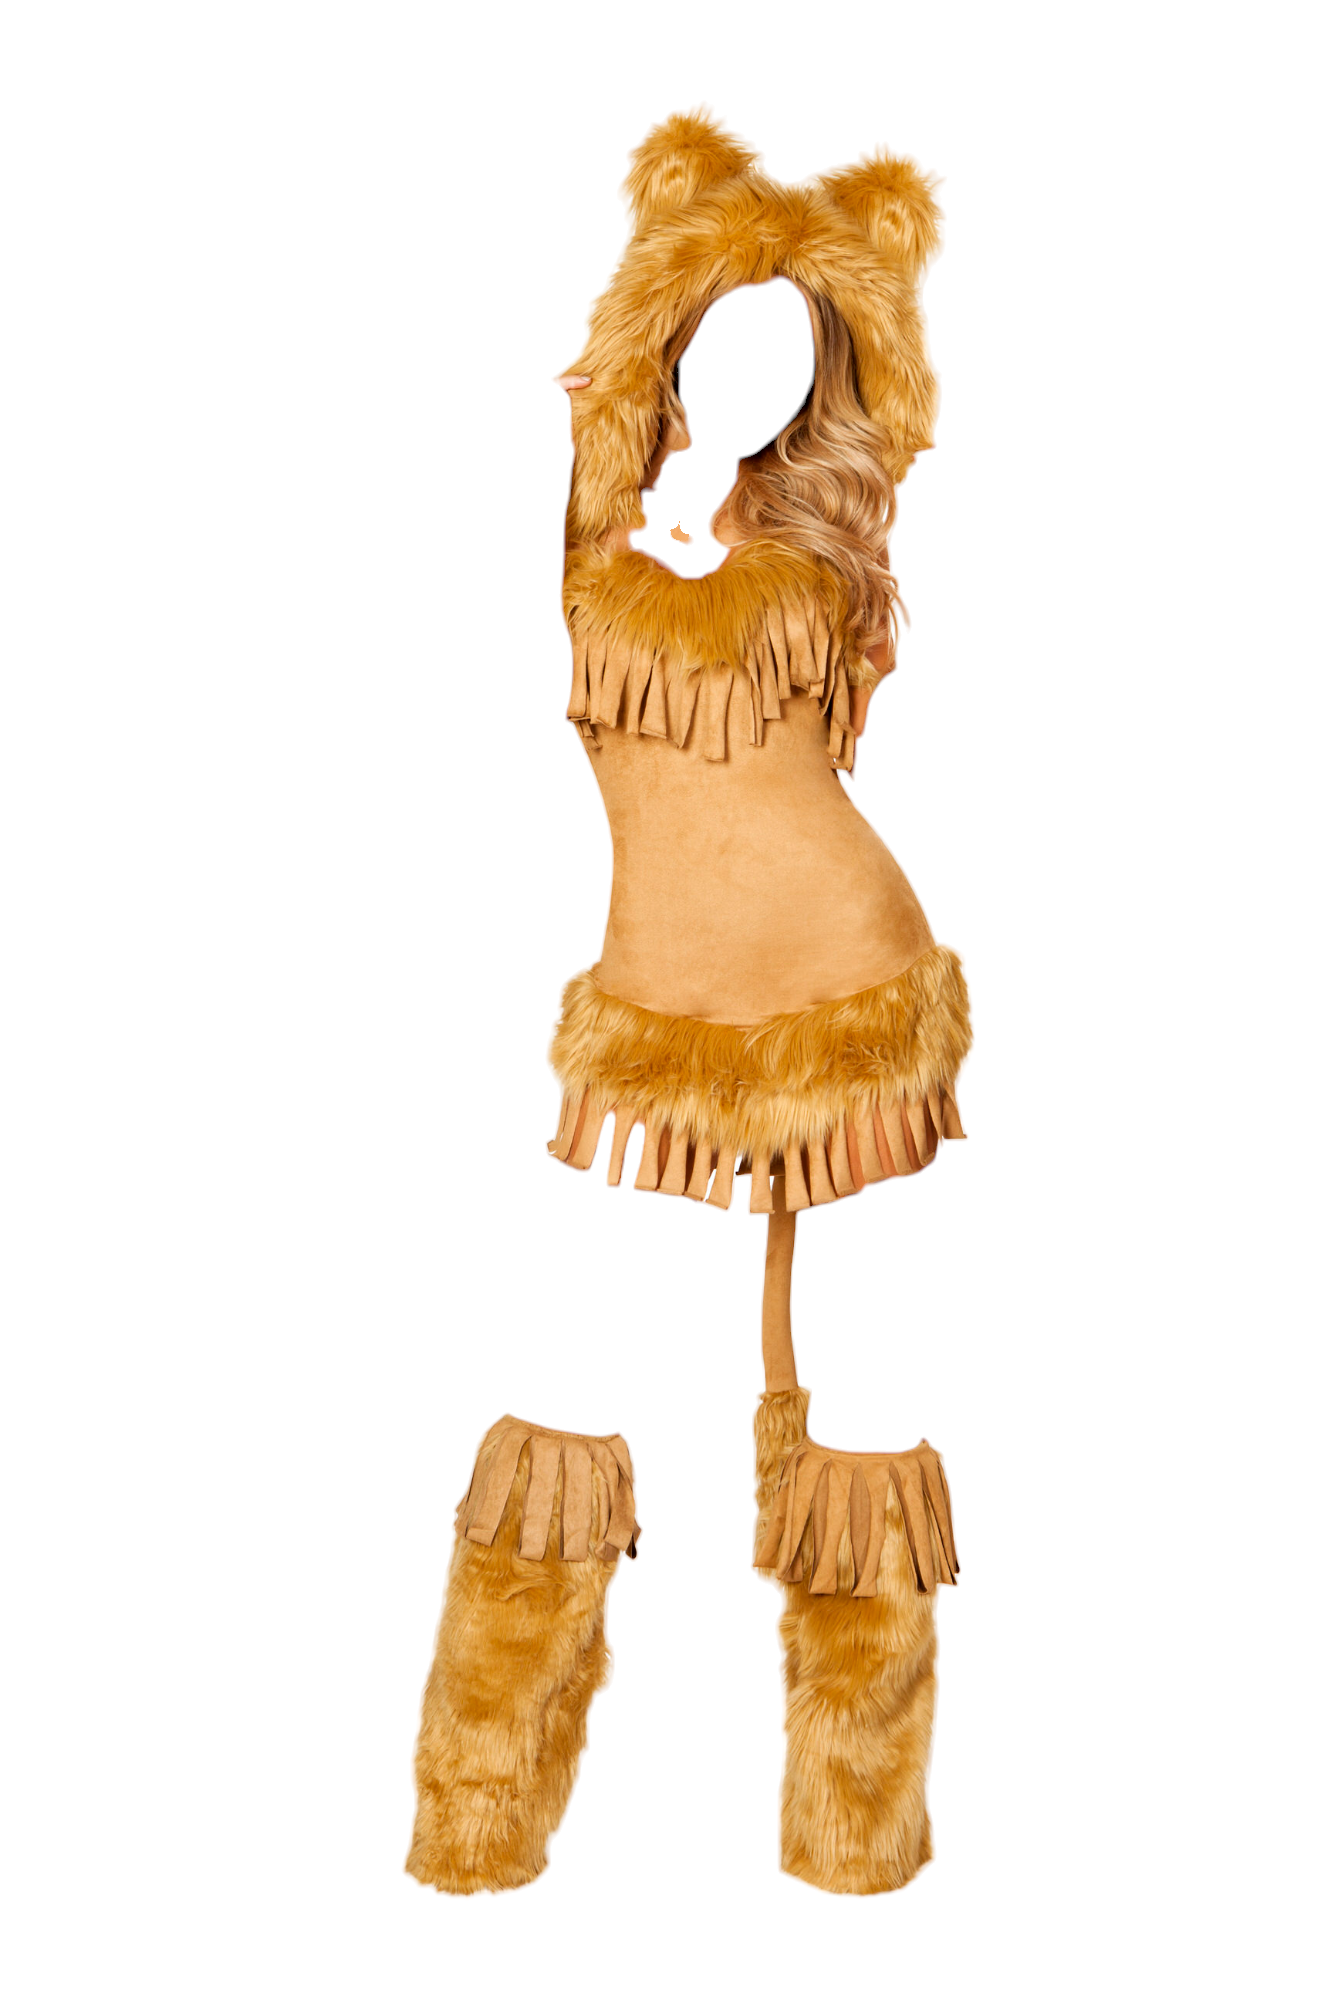 Roma Costume 1 PC The Bashful Lion Hooded Dress Honey